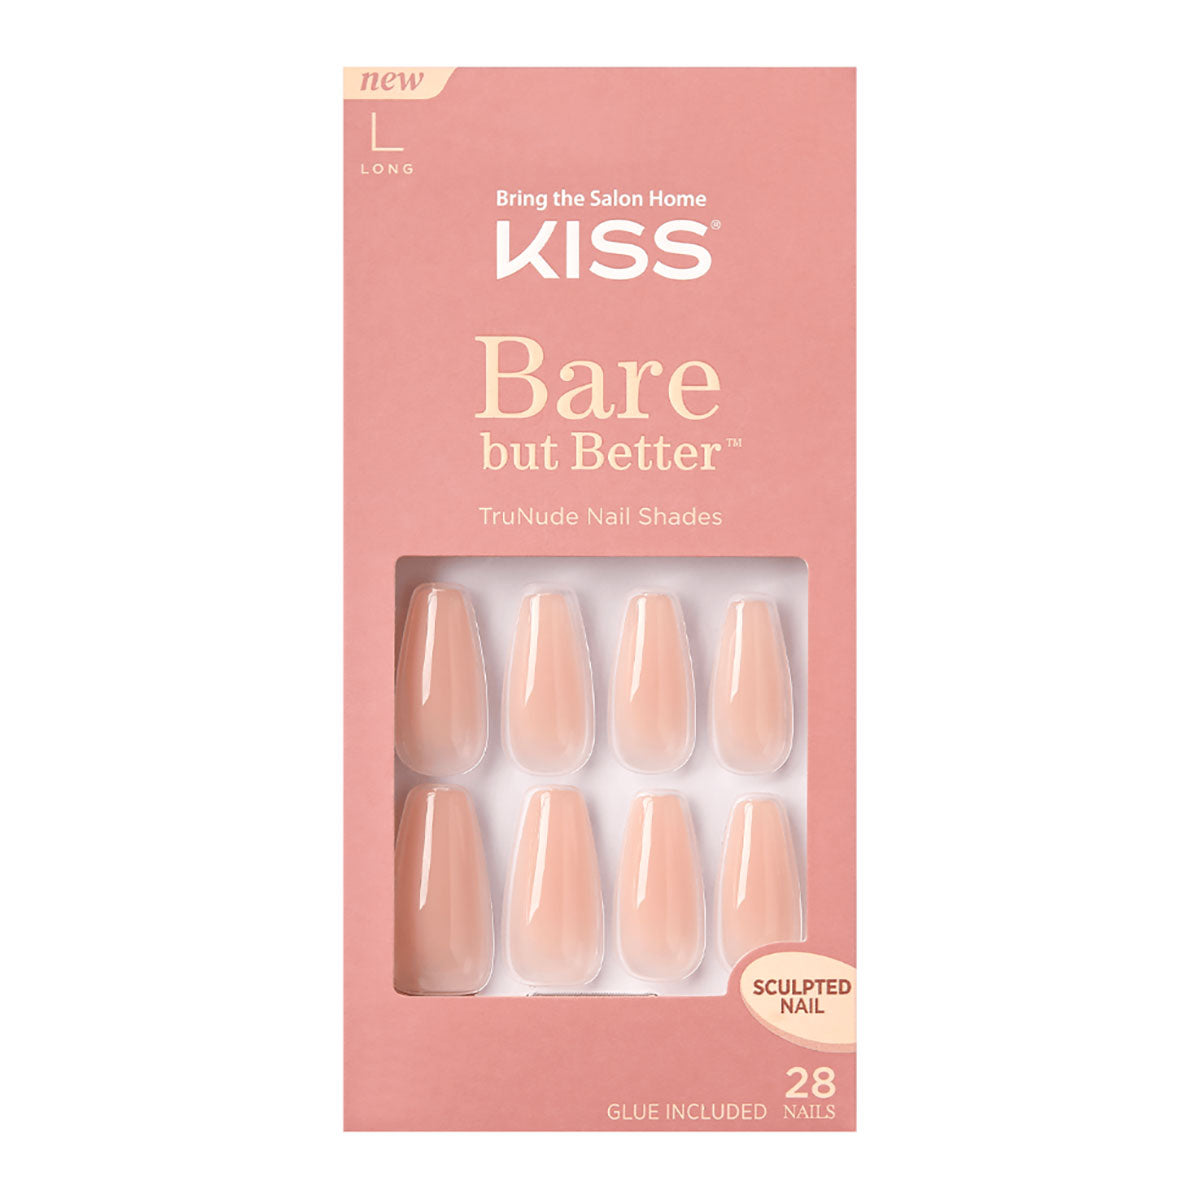 Kiss Bare But Better TruNude Nail Shades | Nude Drama